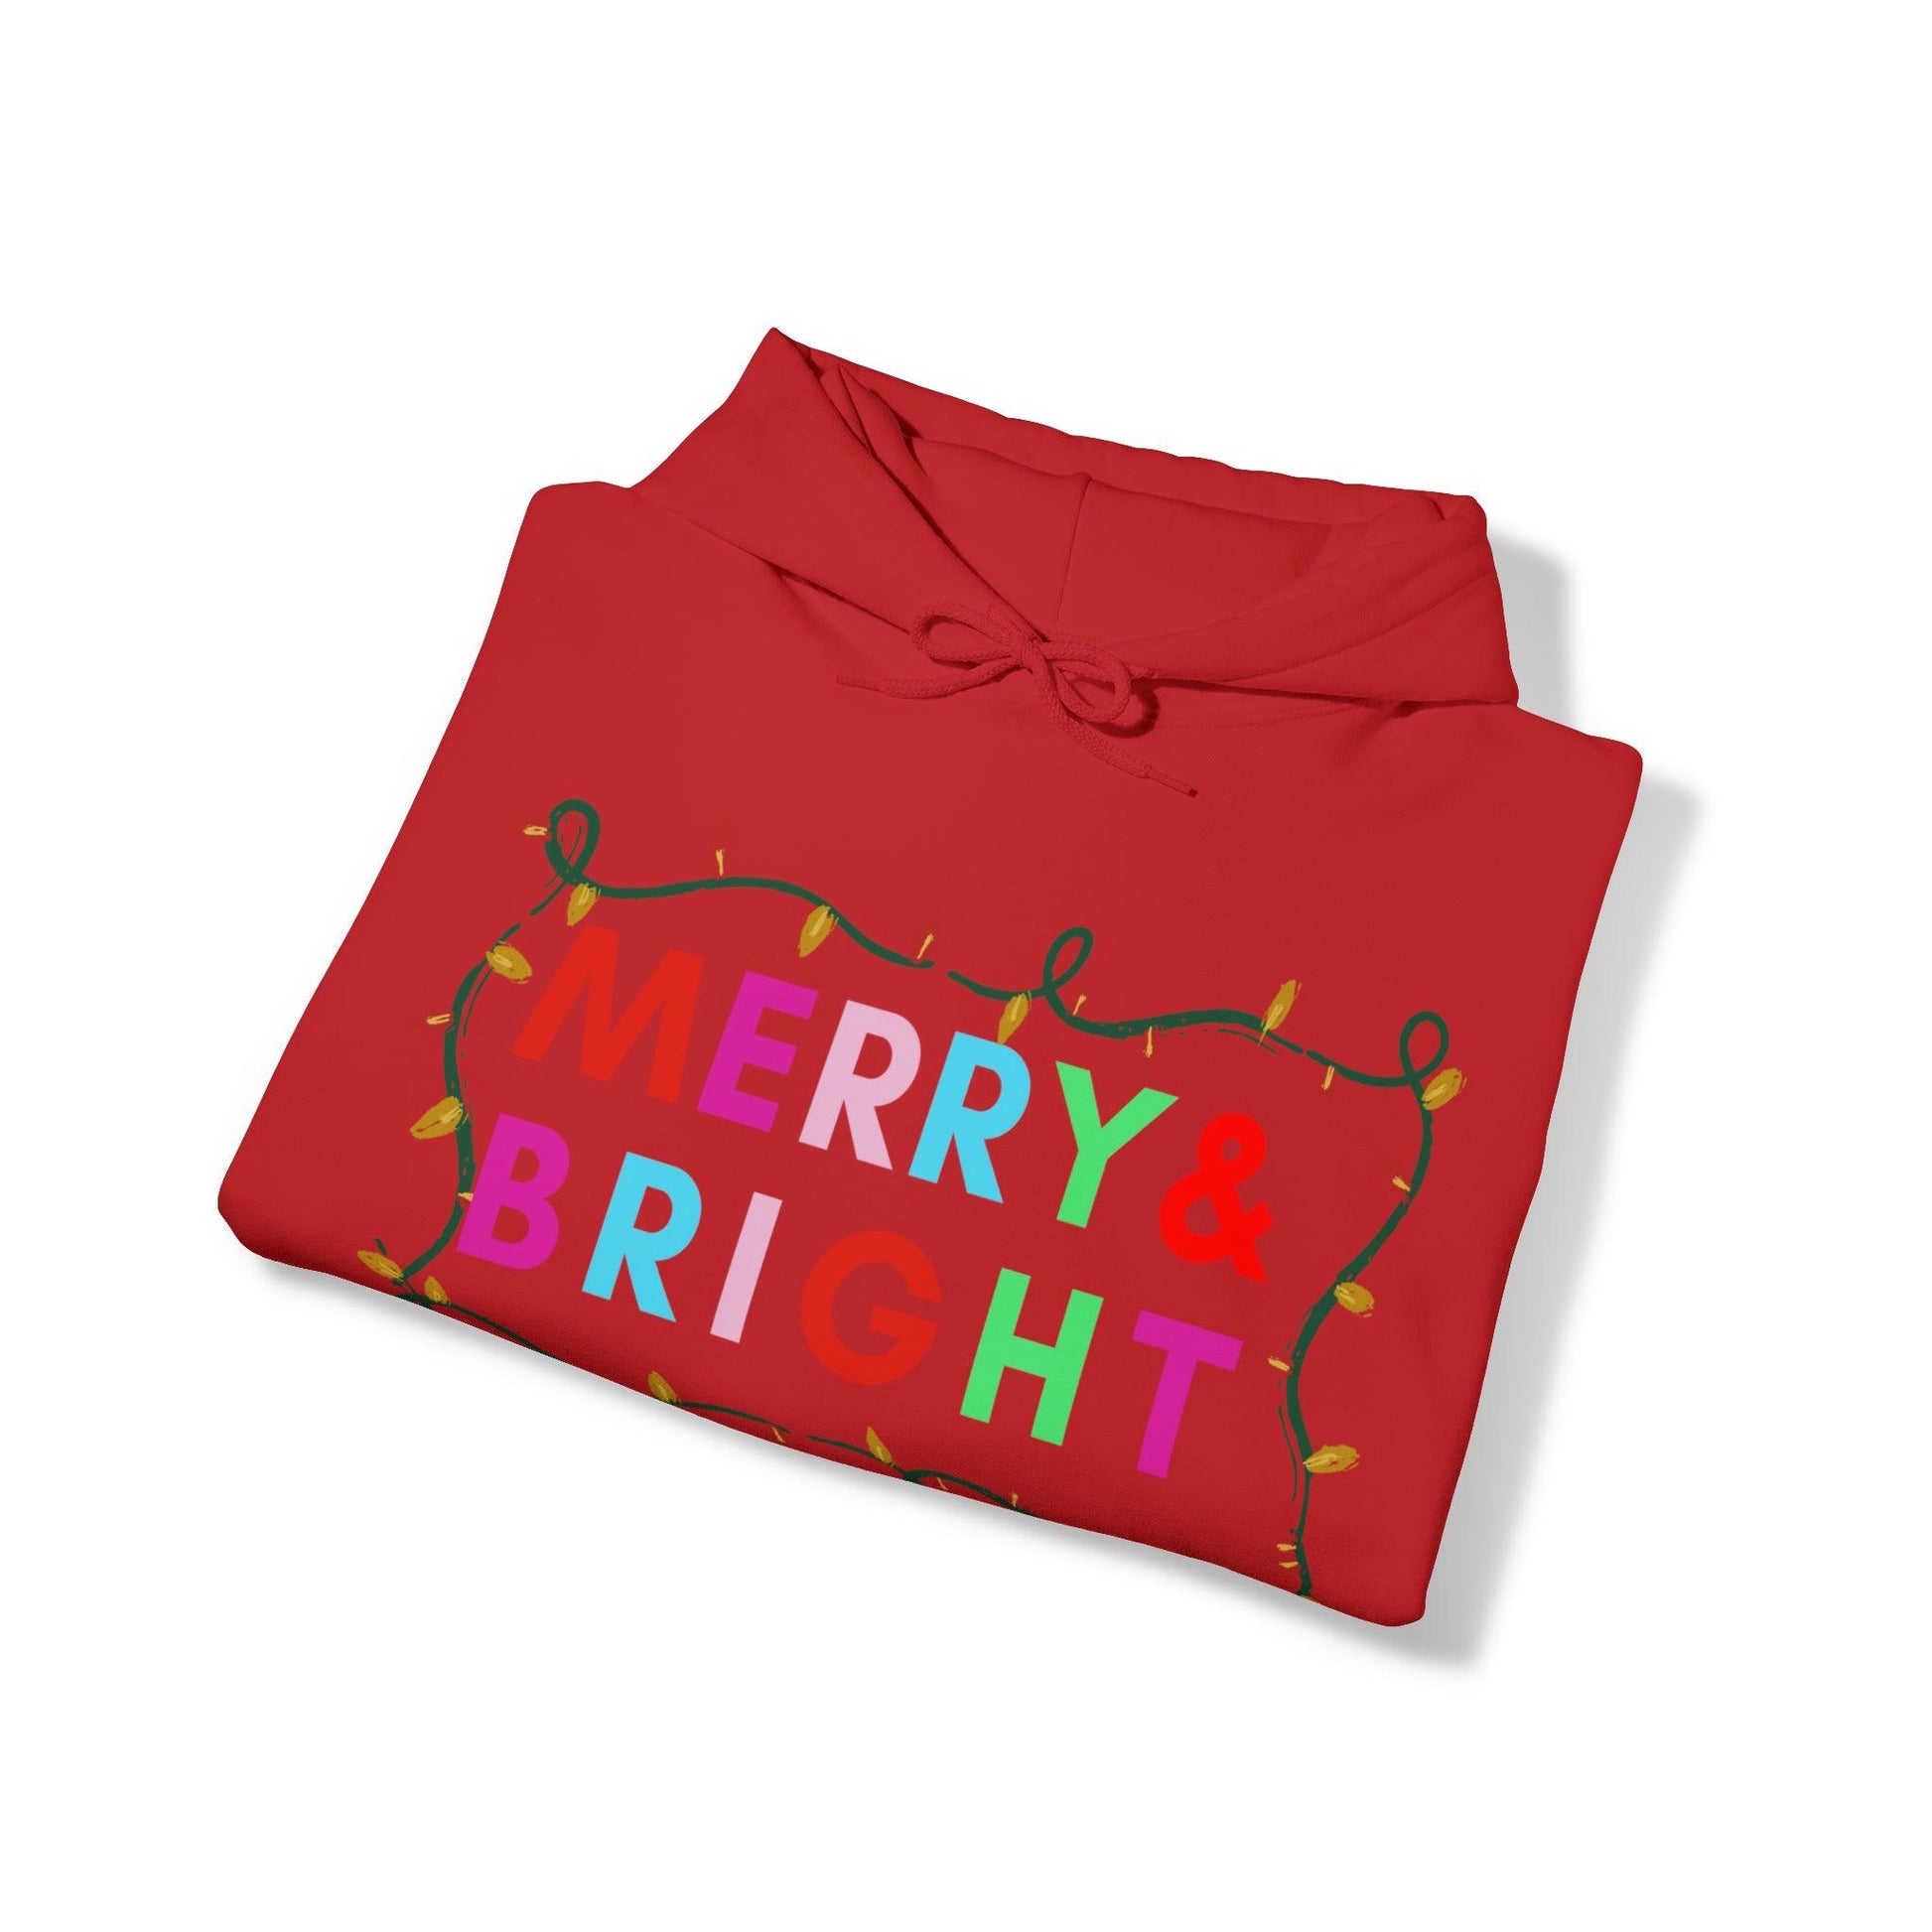 Merry and Bright Christmas Sweatshirt Merry and Bright Hooded Sweatshirt Christmas Sweater Christmas Pullover Christmas Shirt - Giftsmojo